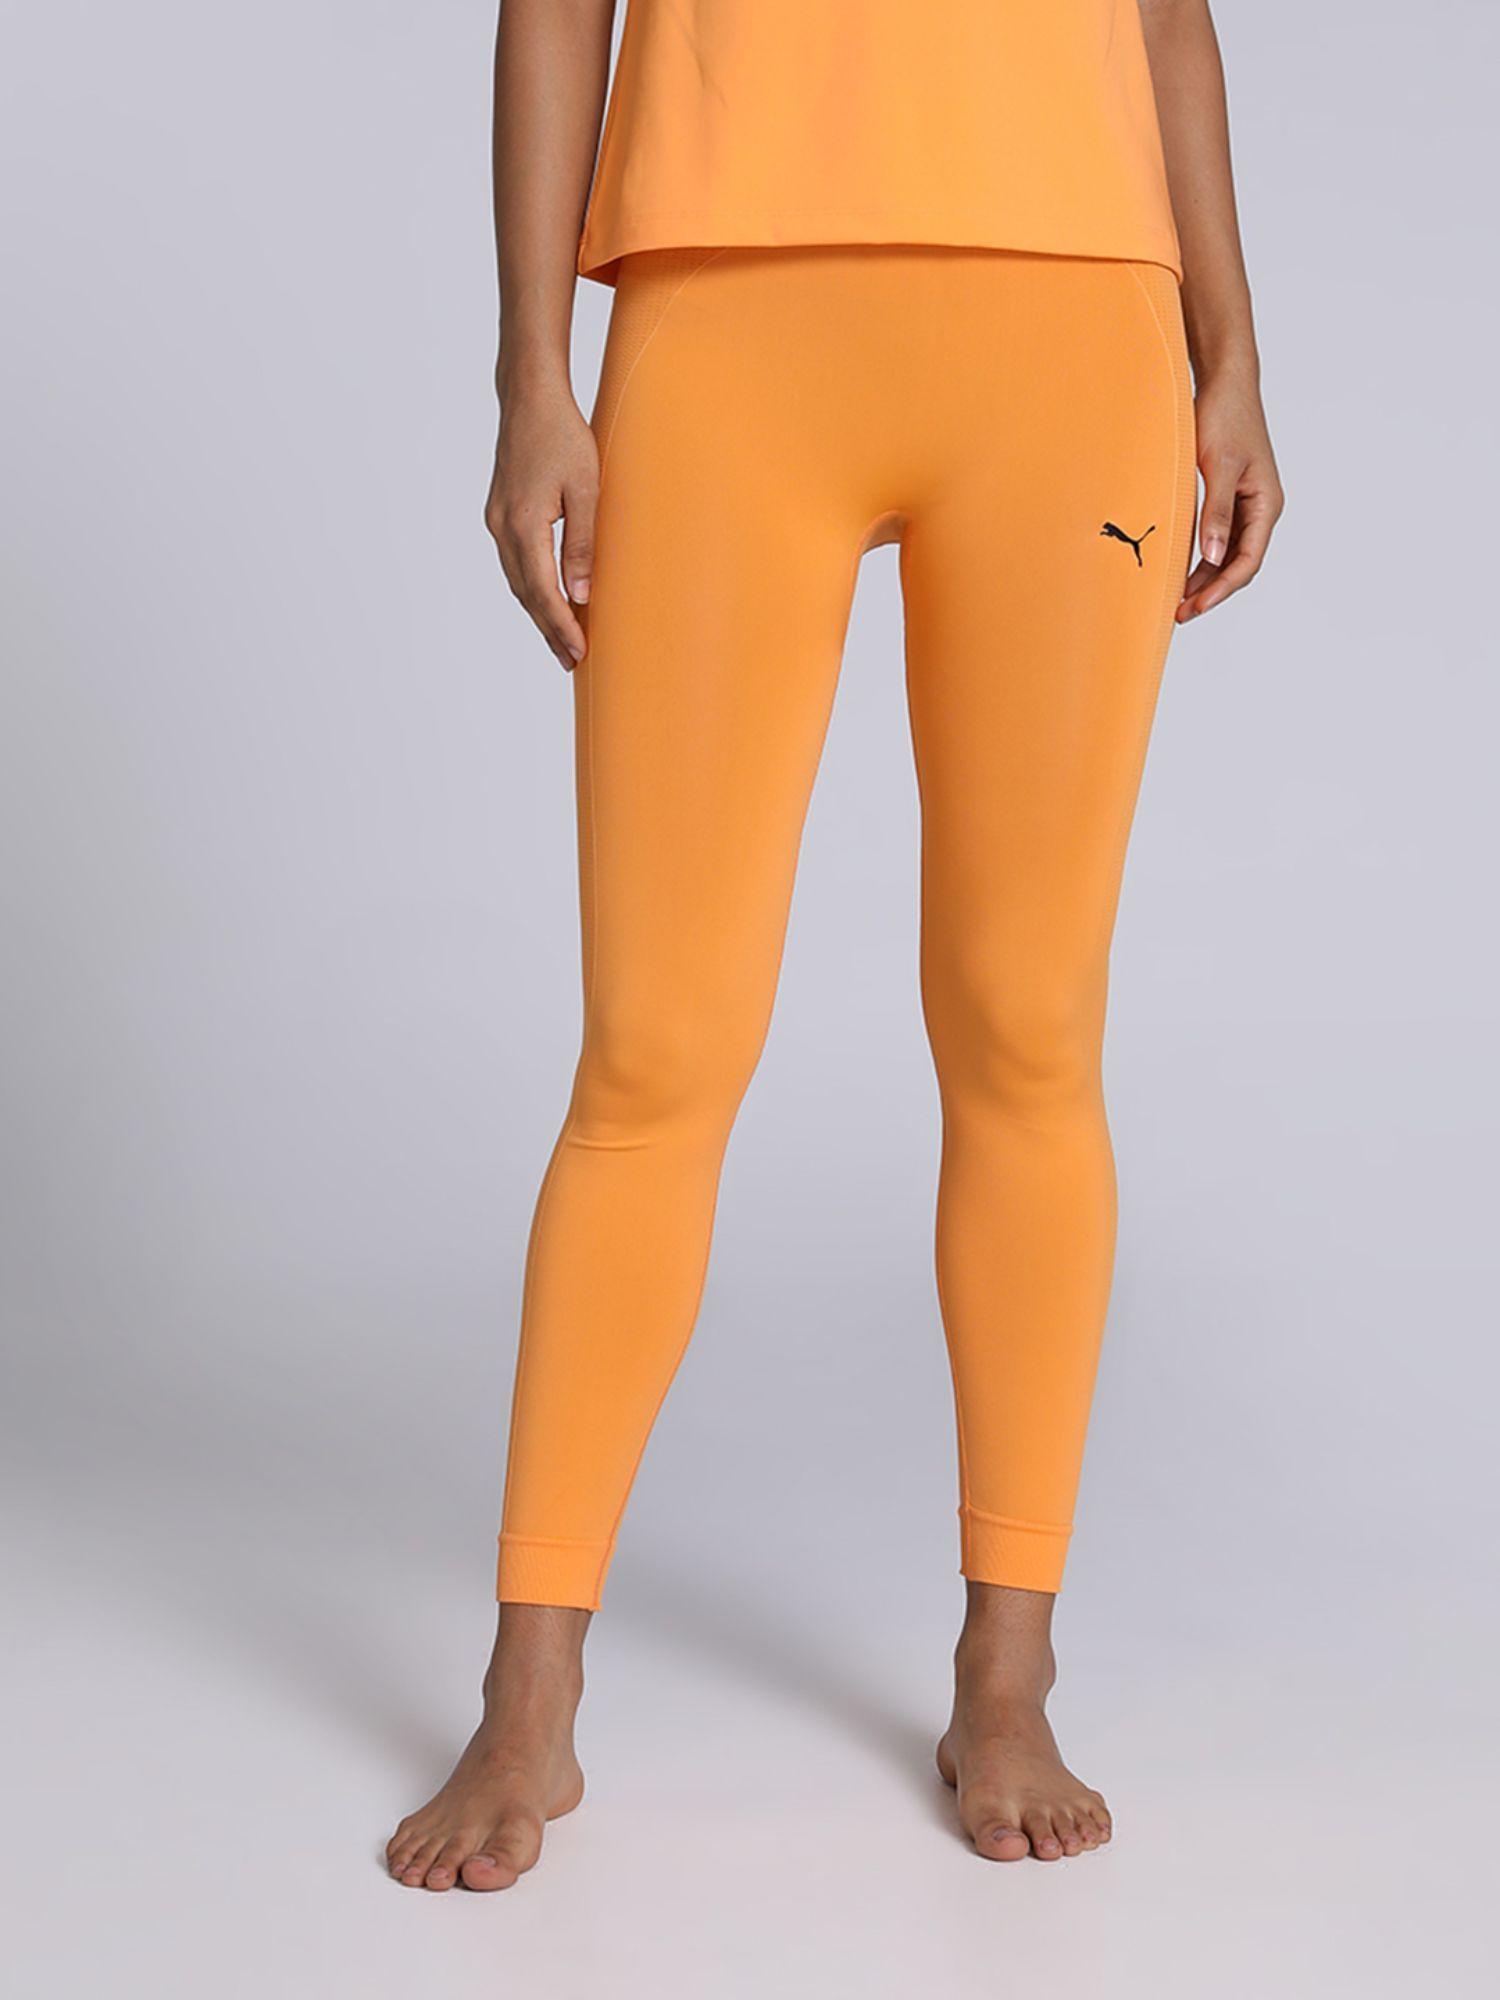 studio foundations womens orange tights